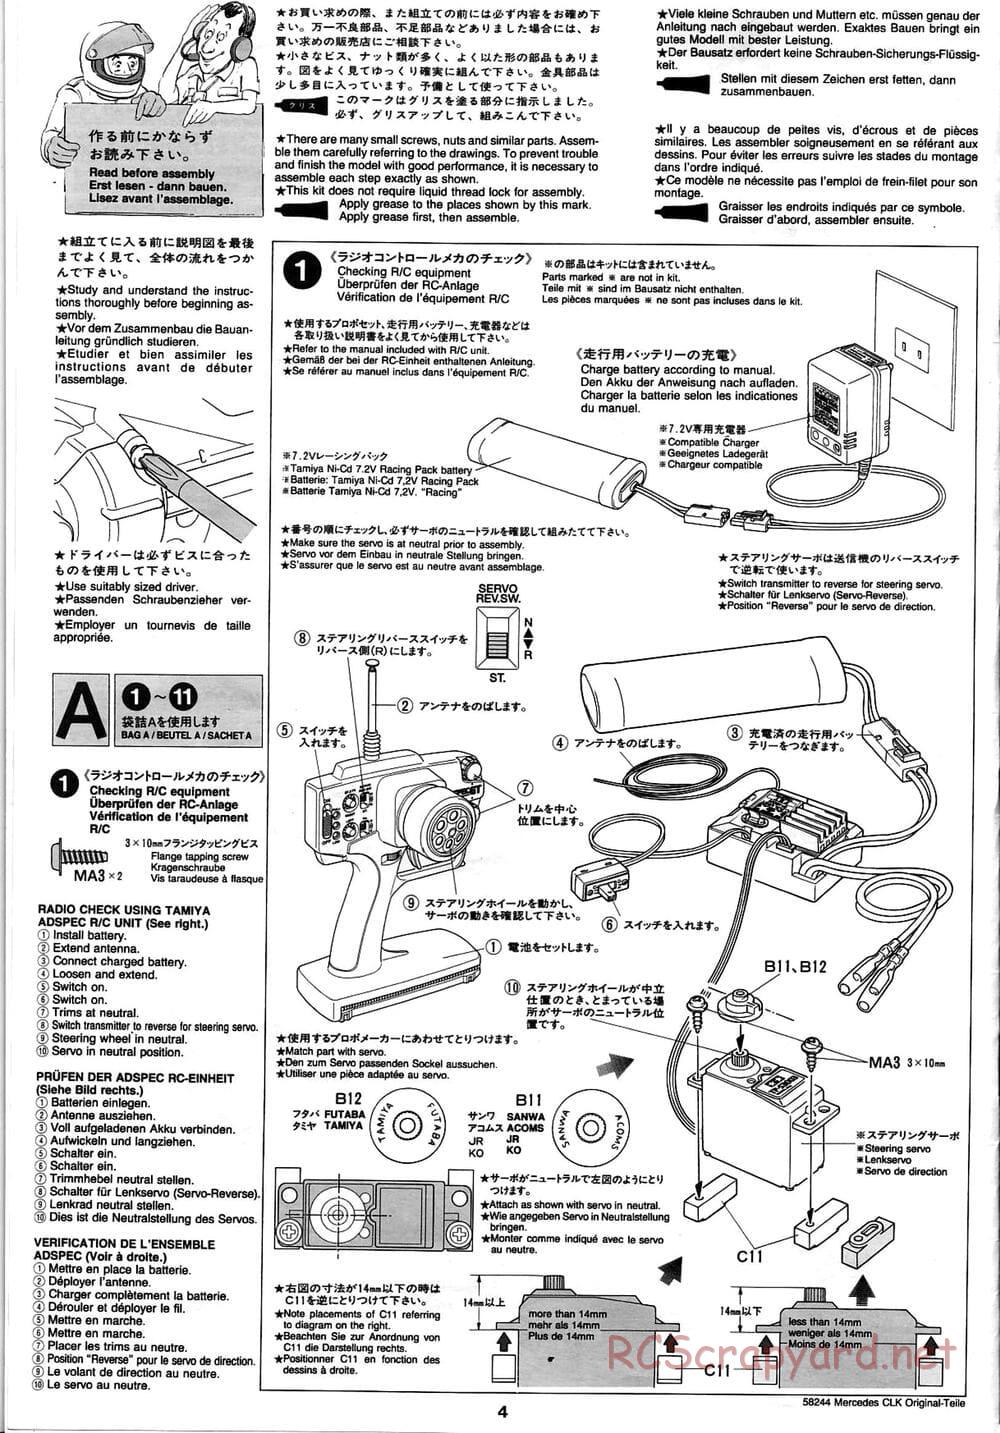 Tamiya - Mercedes CLK-GTR Original-Teile - TL-01 Chassis - Manual - Page 4